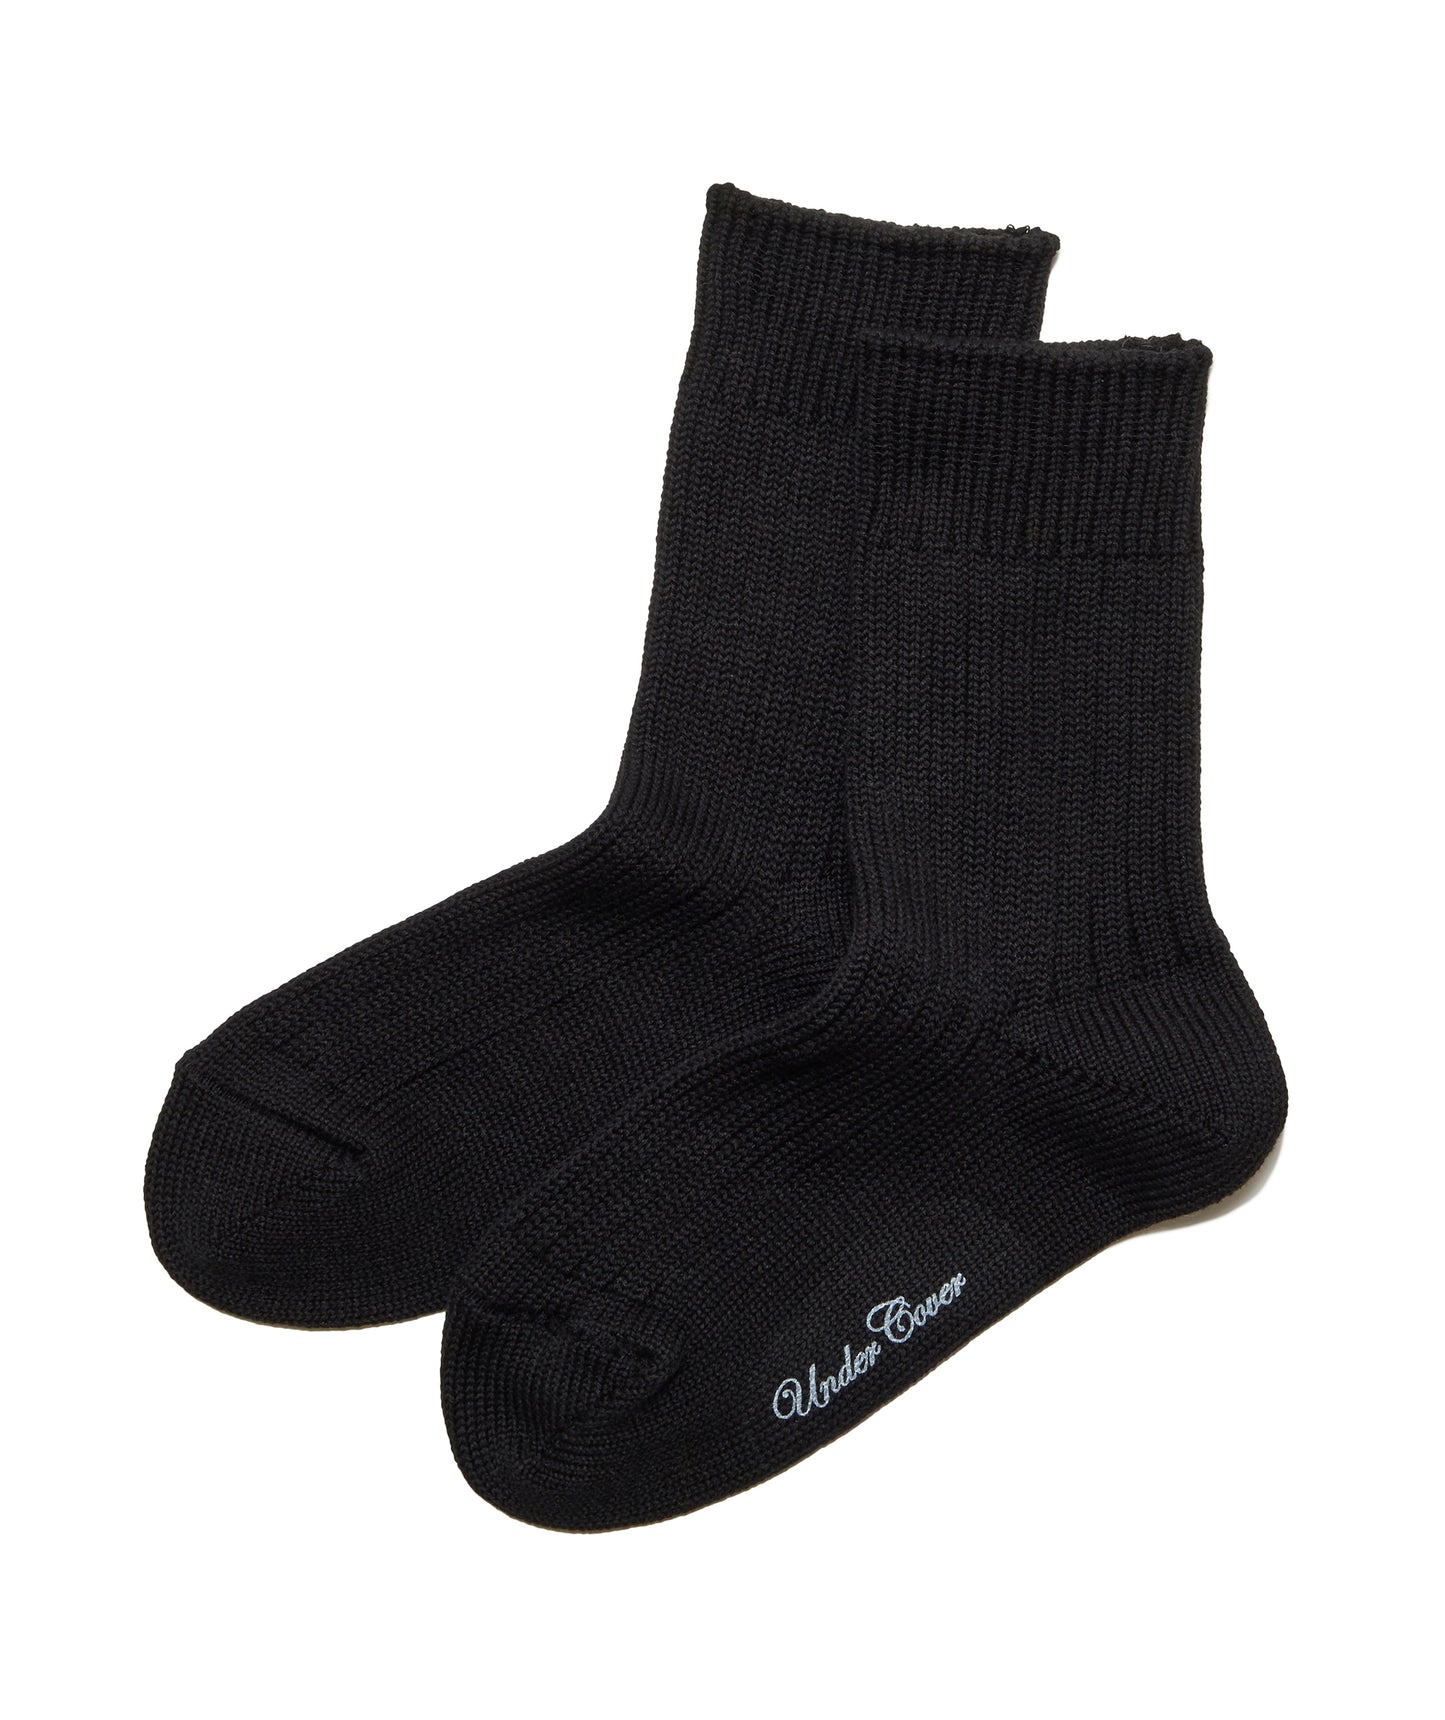 Undercover Black Socks